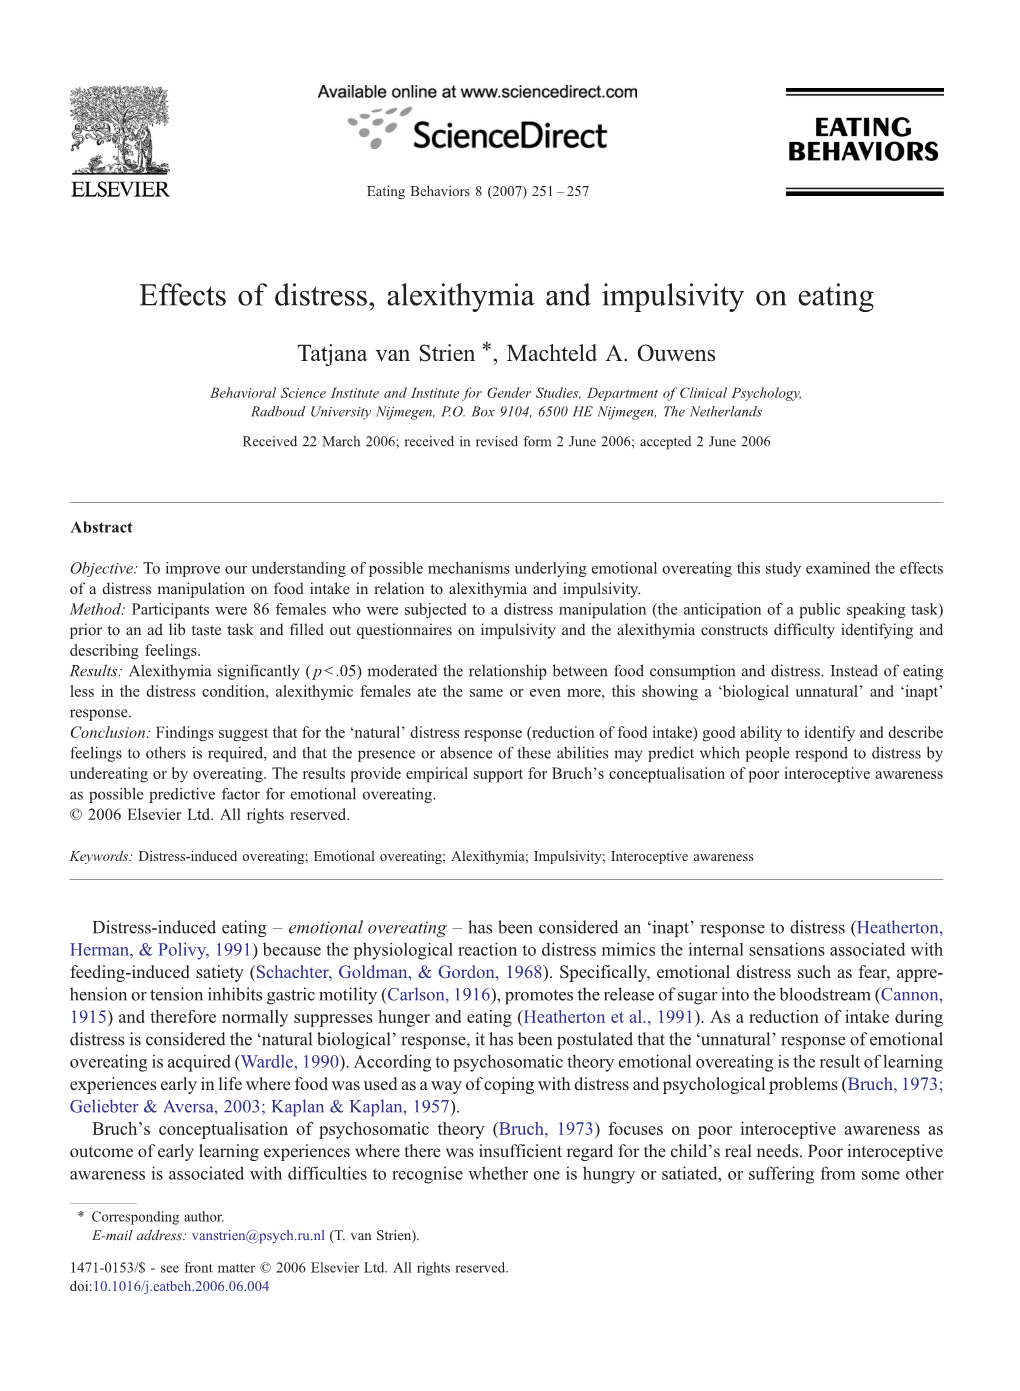 Effects of Distress, Alexithymia and Impulsivity on Eating ⁎ Tatjana Van Strien , Machteld A